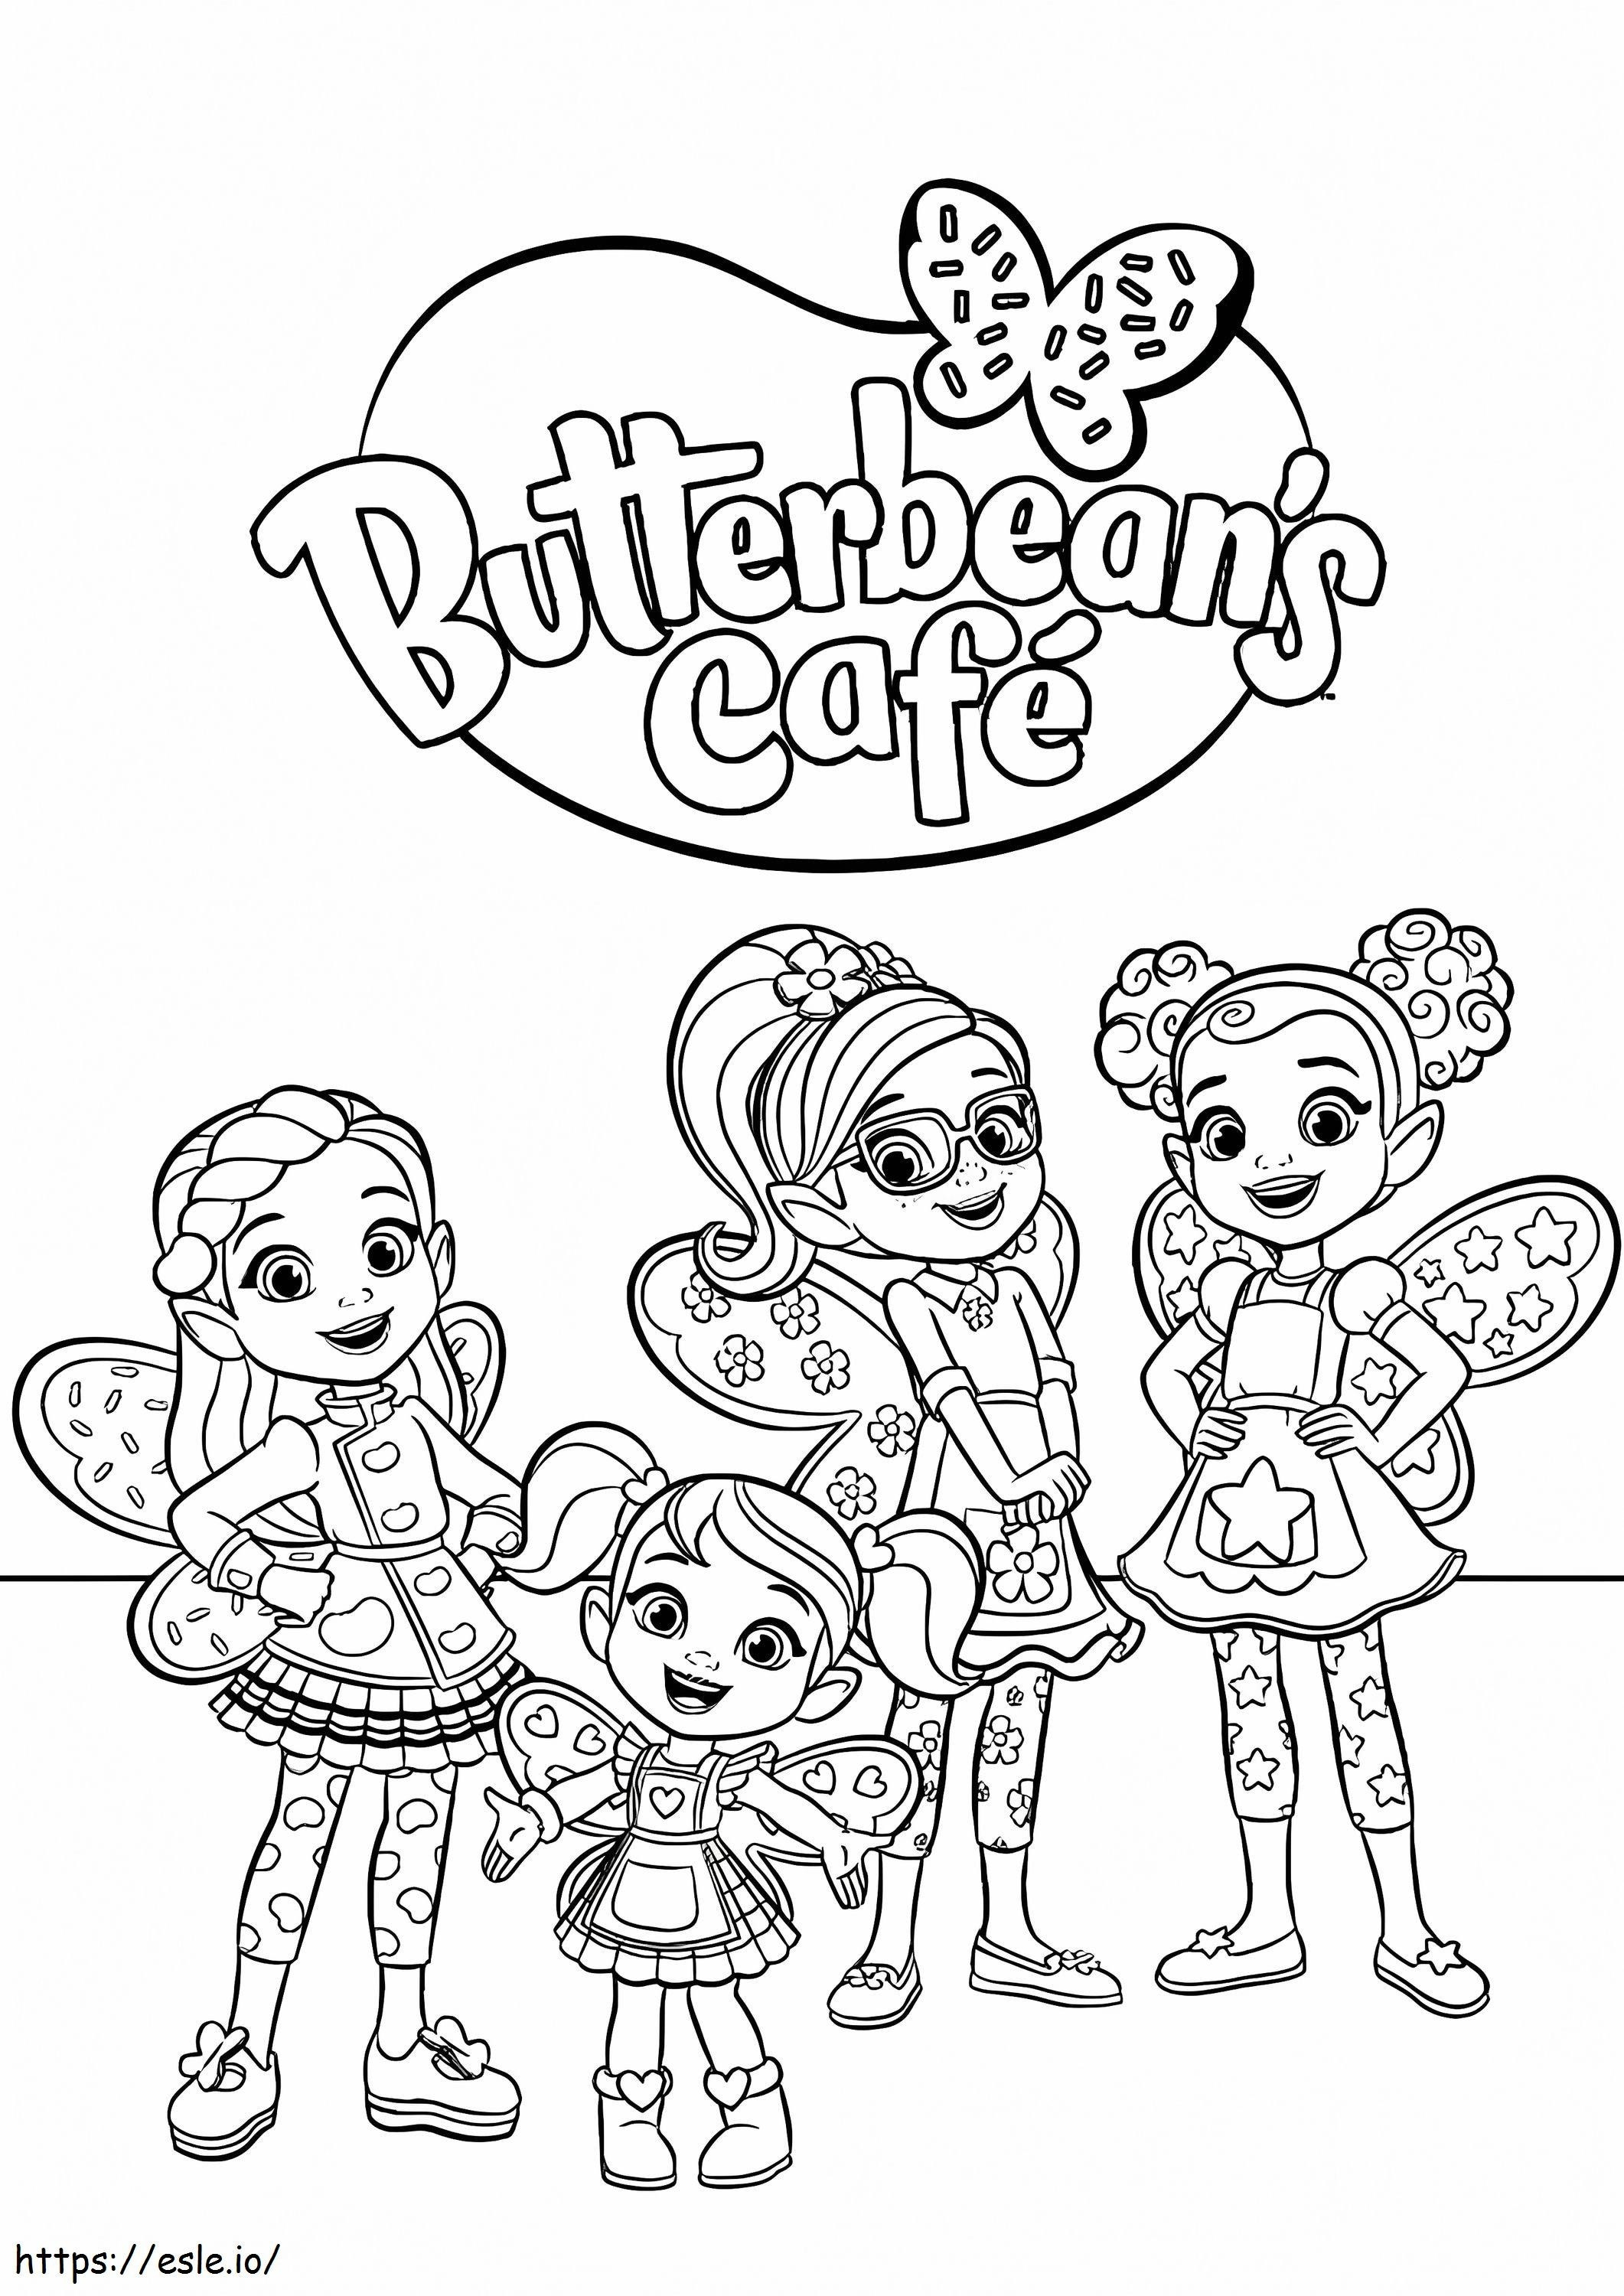 Karakterek a Butterbeans Cafe-ból kifestő